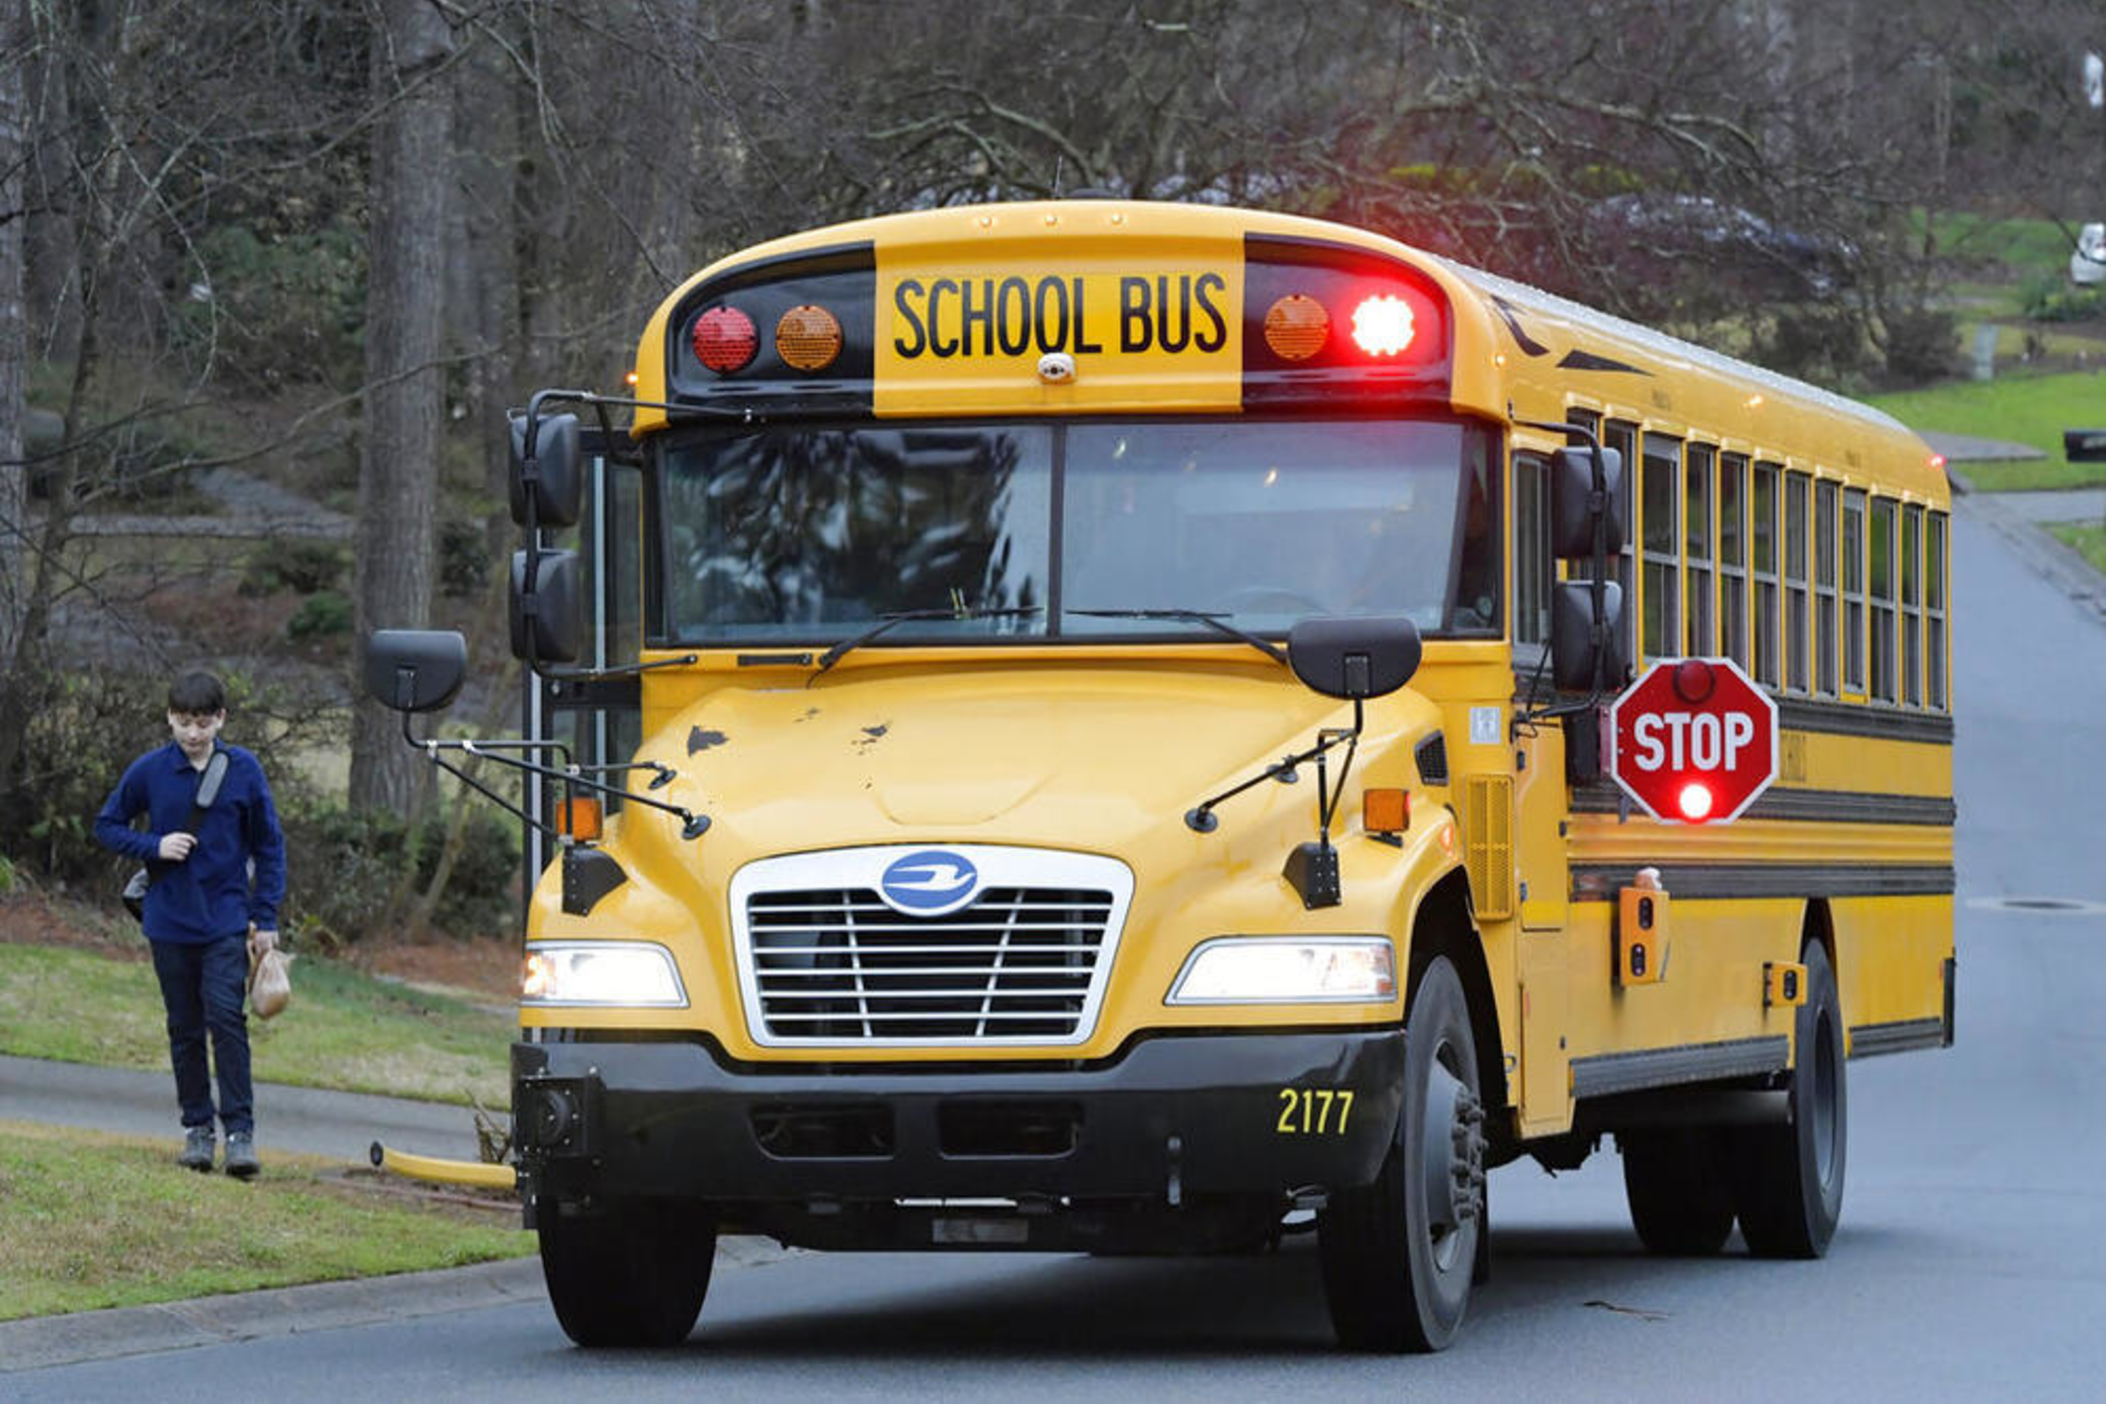 A Cobb County School Bus.